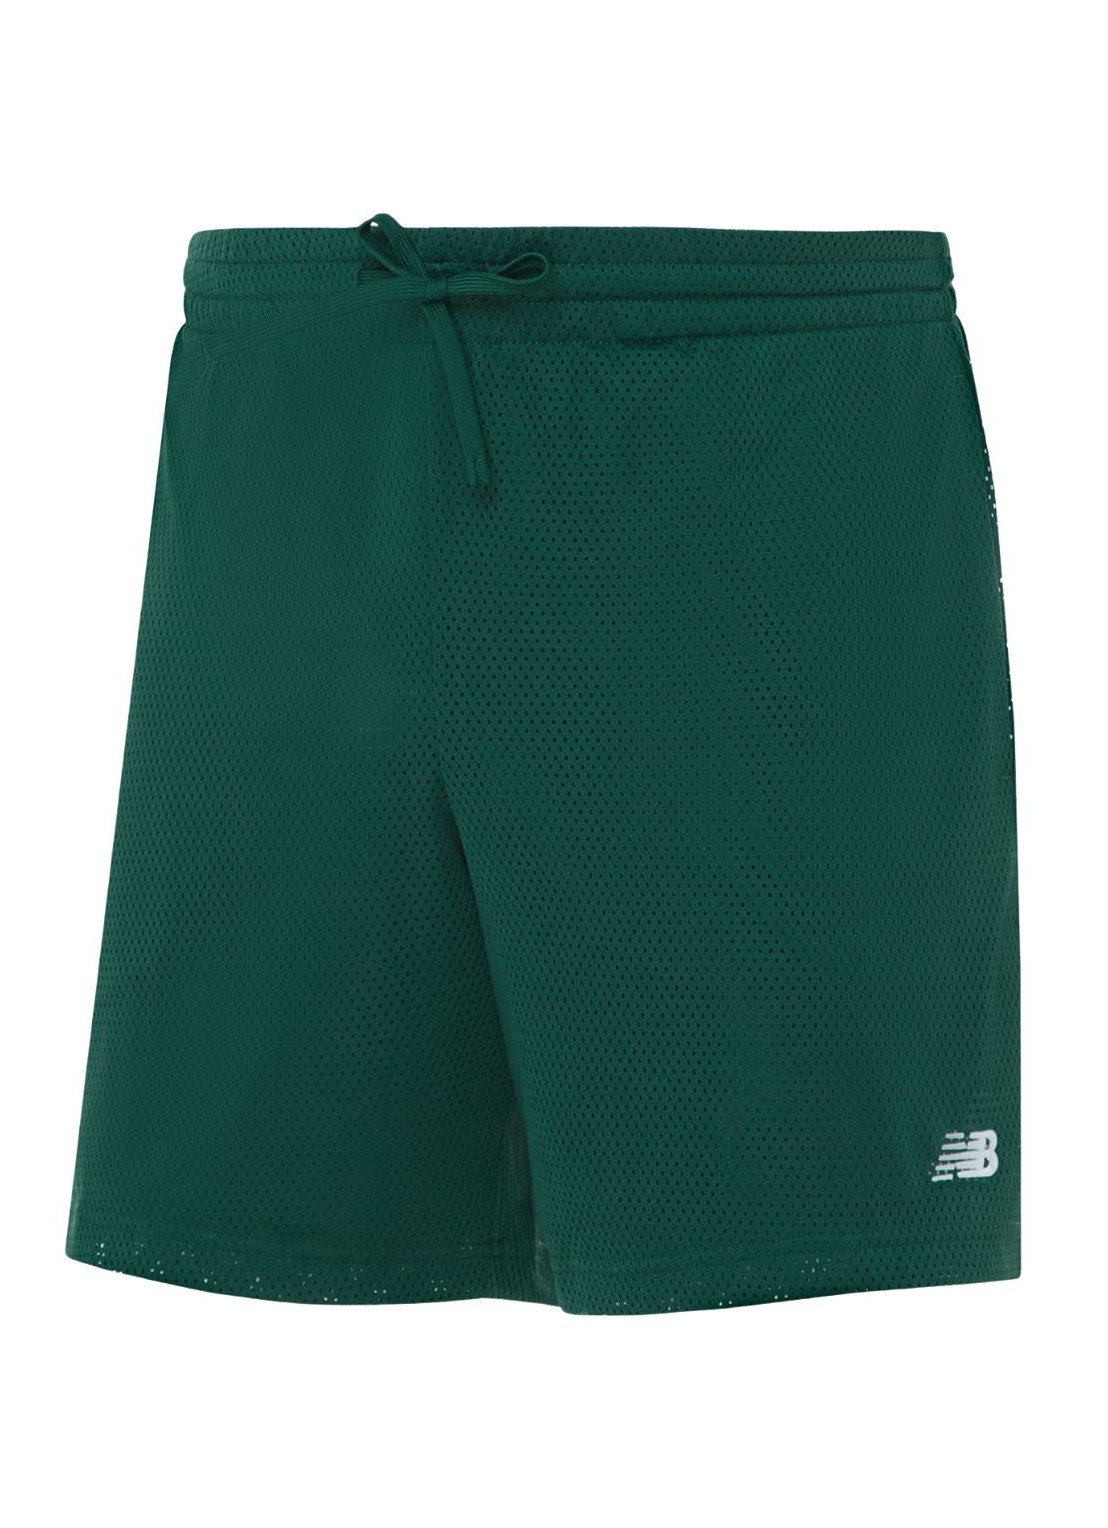 Pantalon corto new balance short pant mannb mesh short 7 inch - ms41515nwg nwg talla verde
 